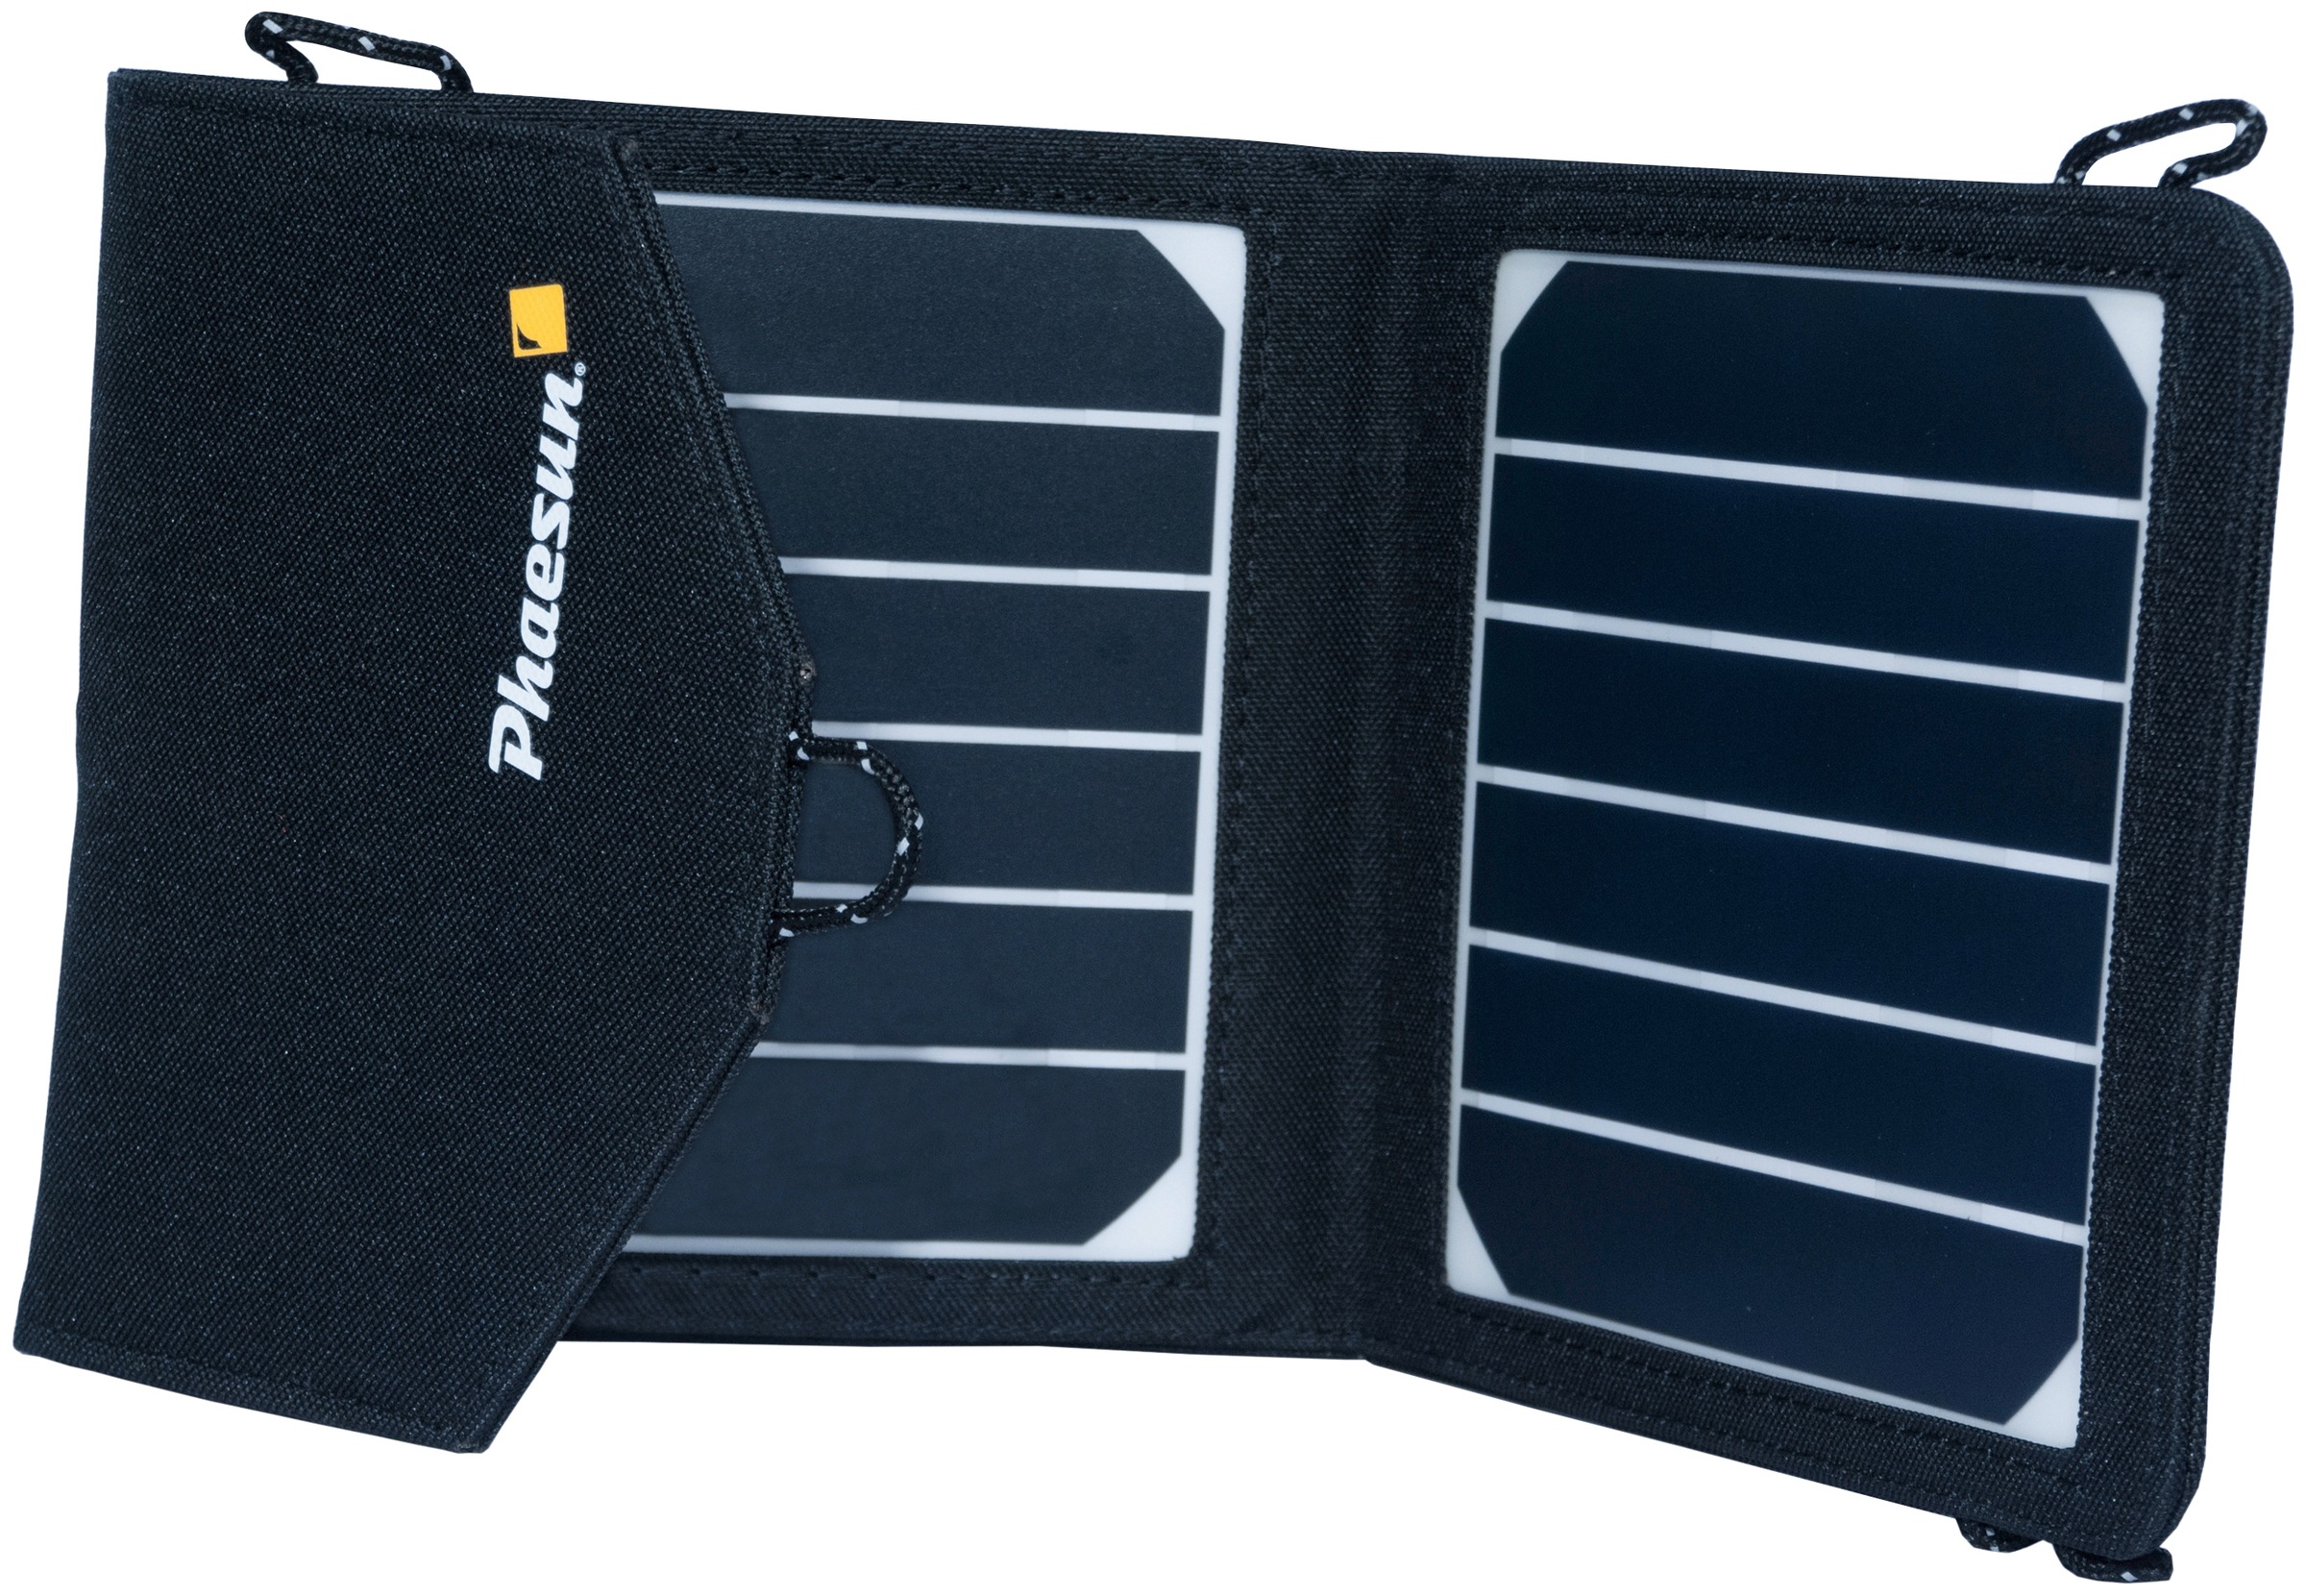 Phaesun Solarladegerät »Trek King«, 1000 mA, 2x3,5 W, 5 VDC